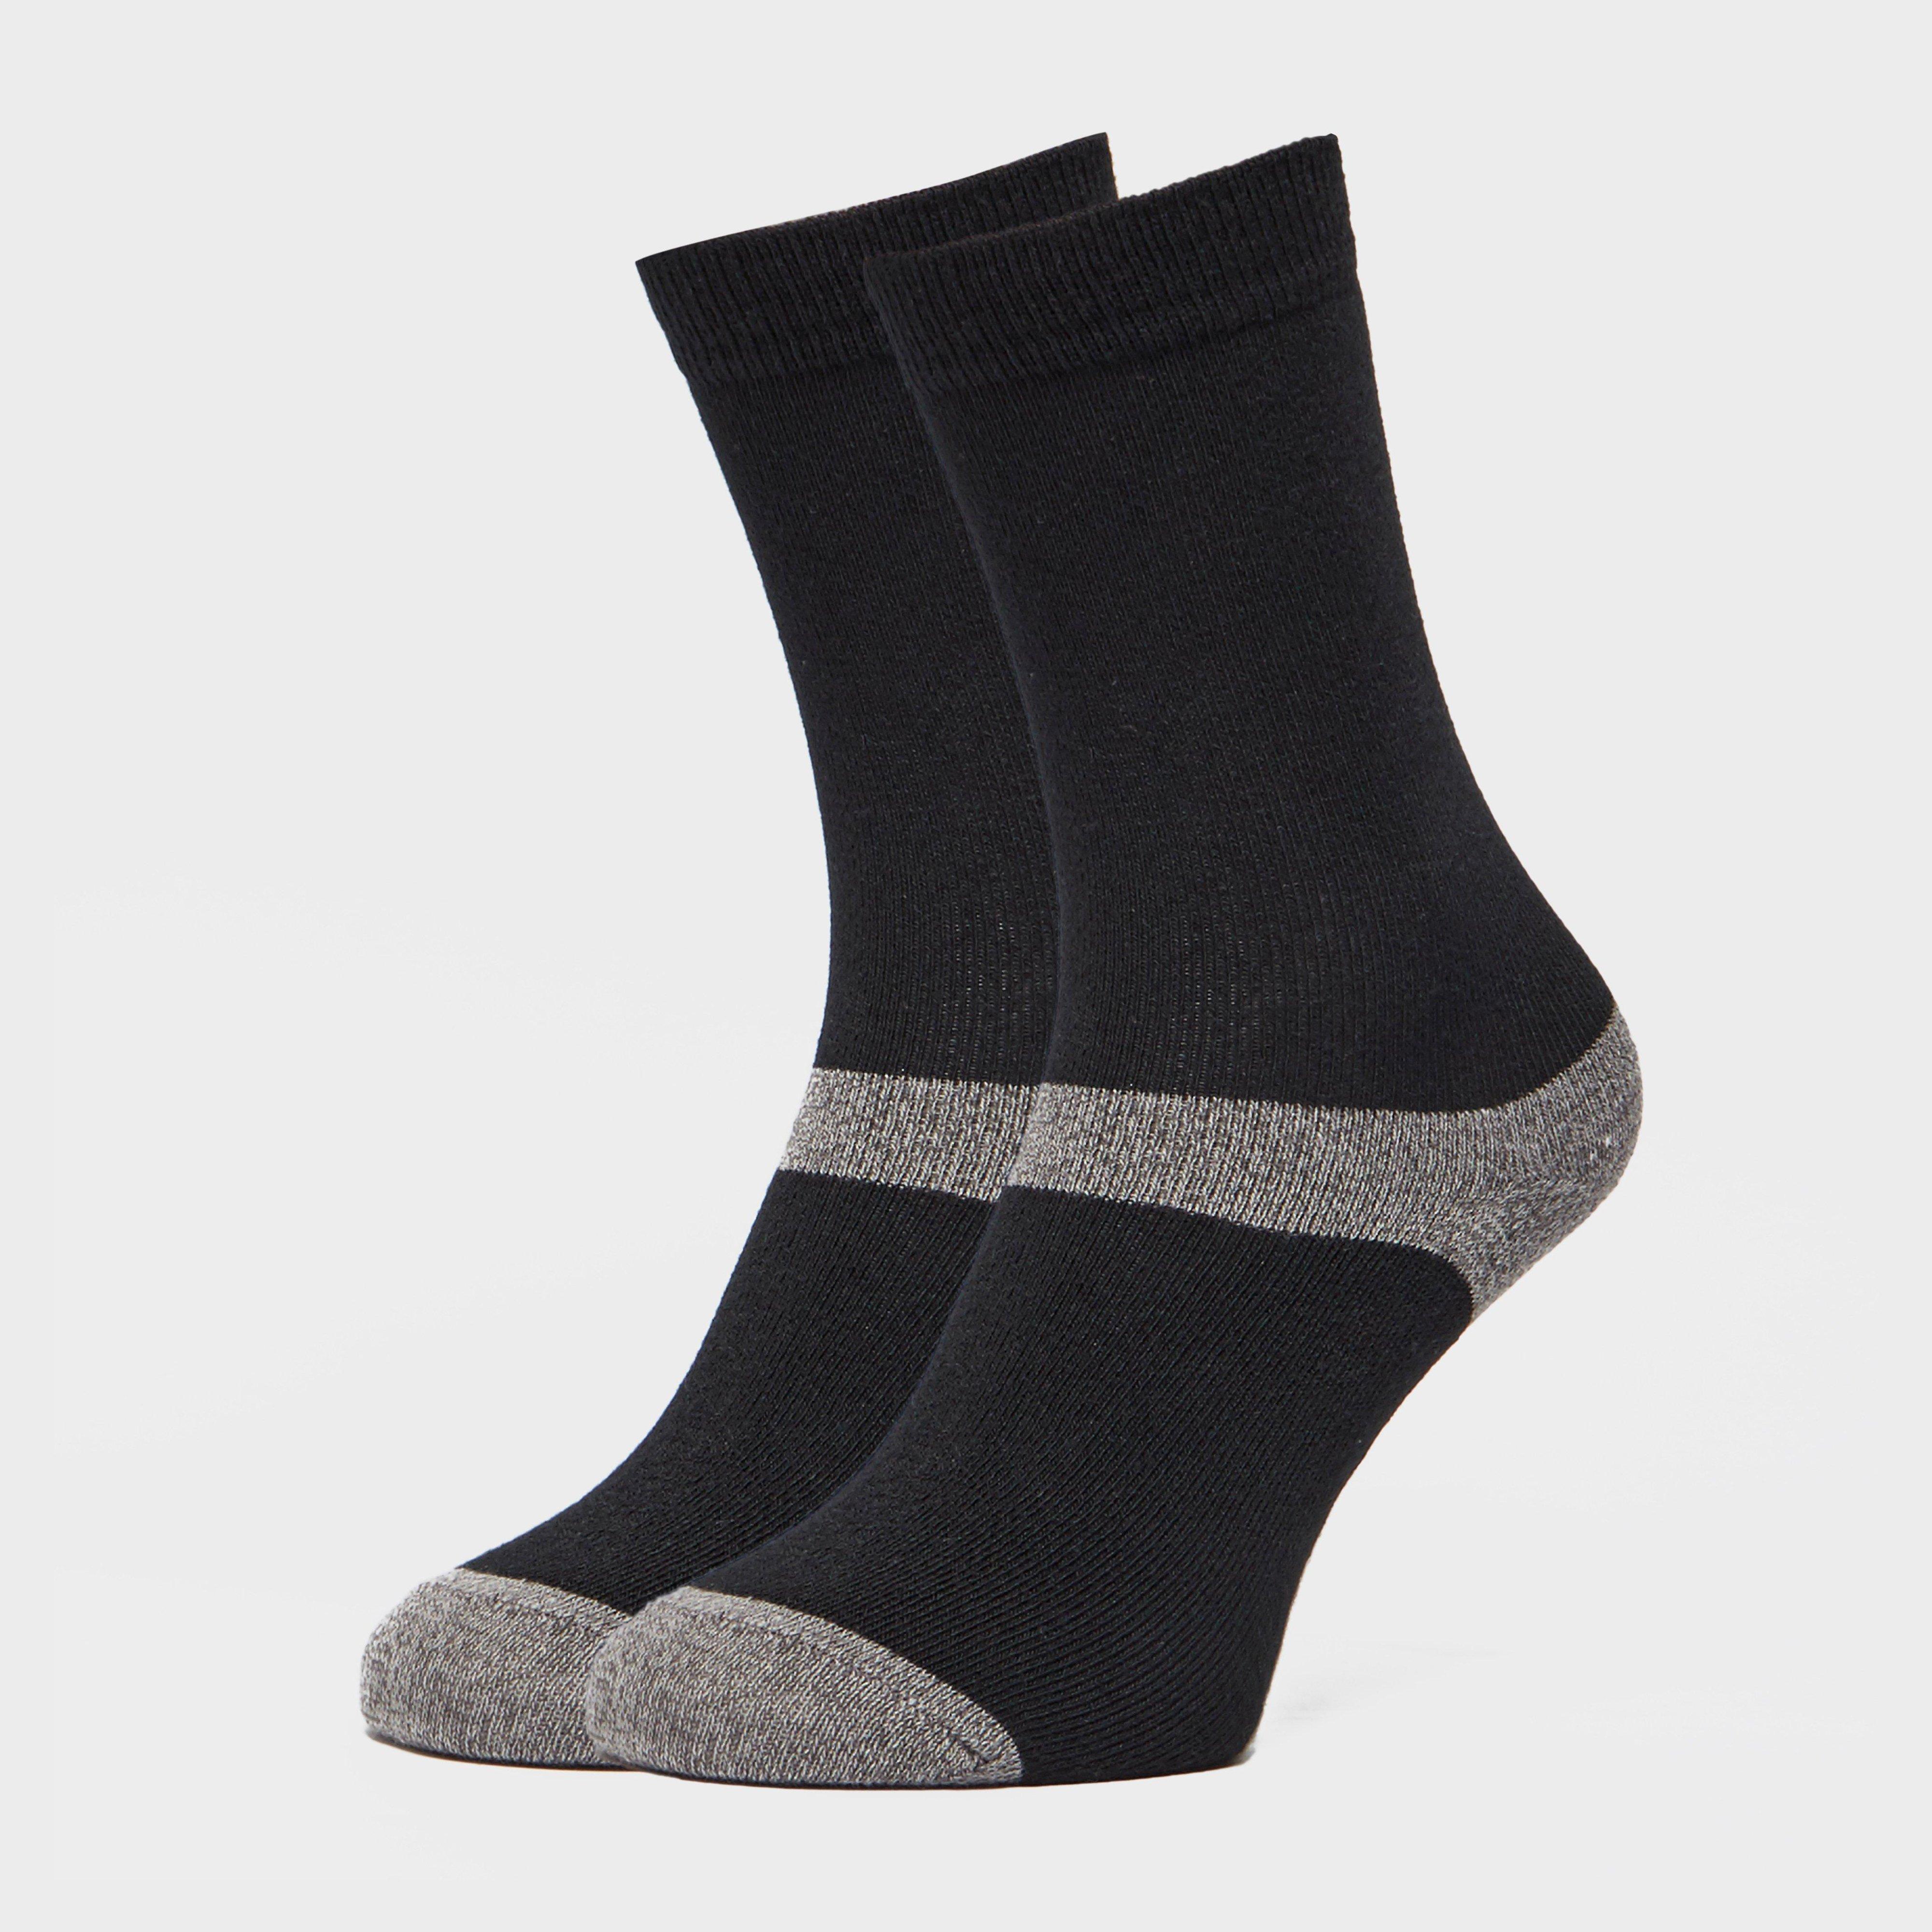 Image of Unisex Multiactive Coolmax Liner Socks 2 Pack Black